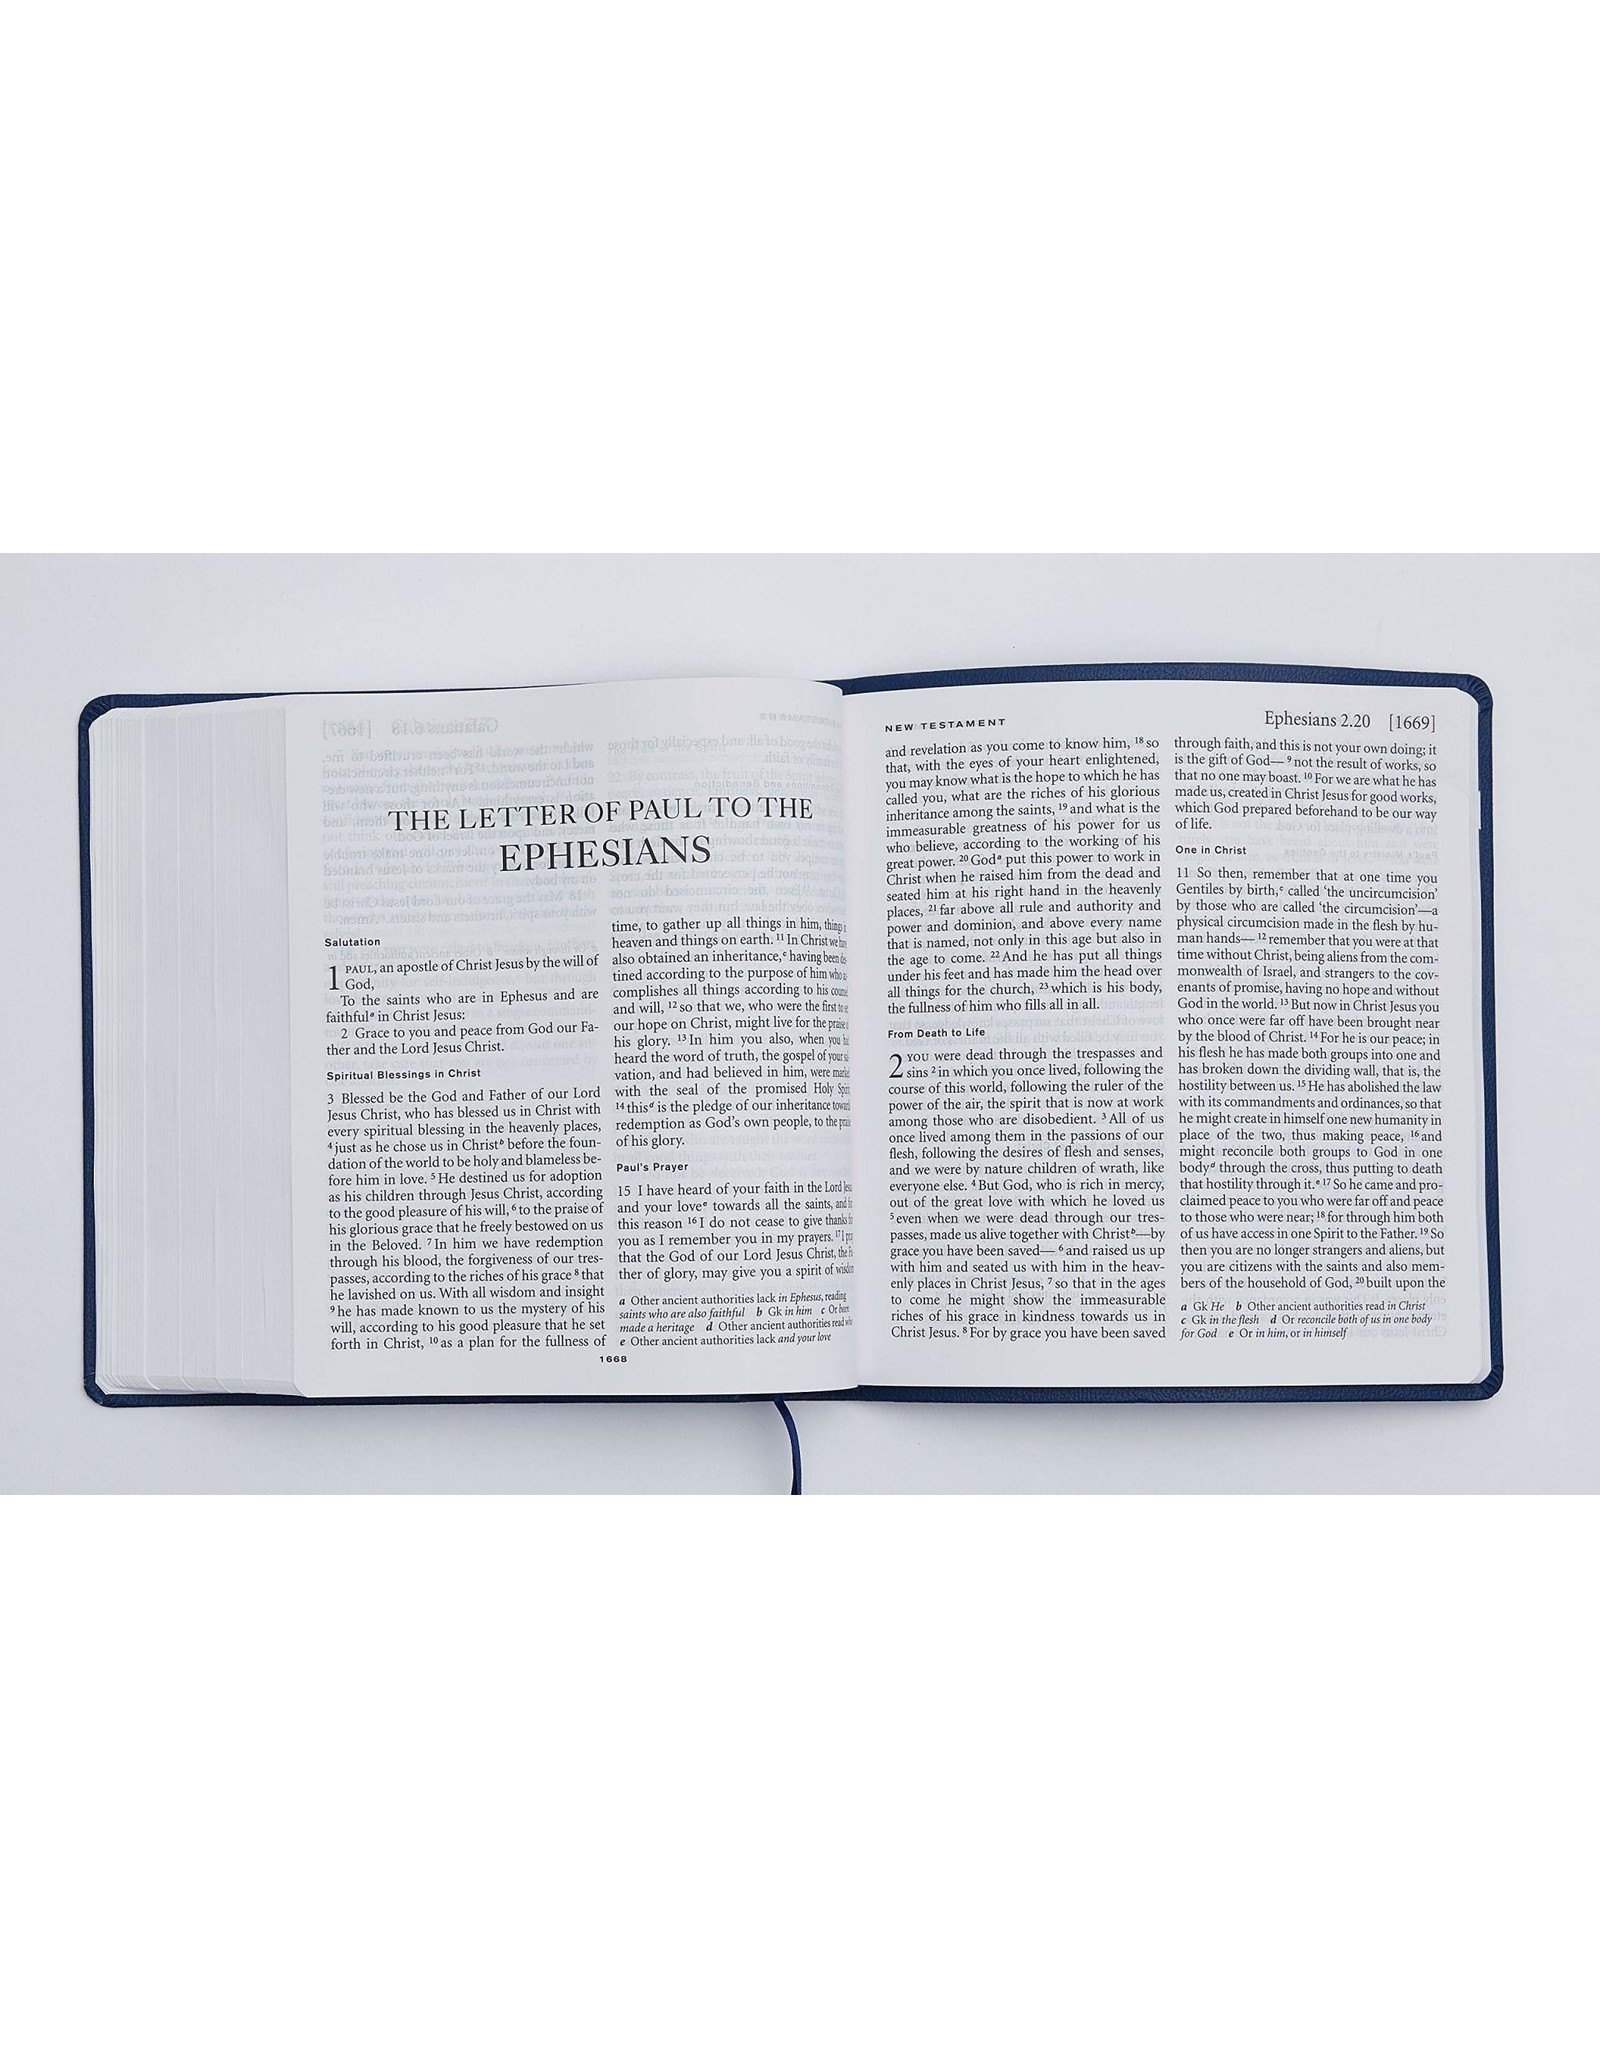 NRSV Large Print Catholic Bible